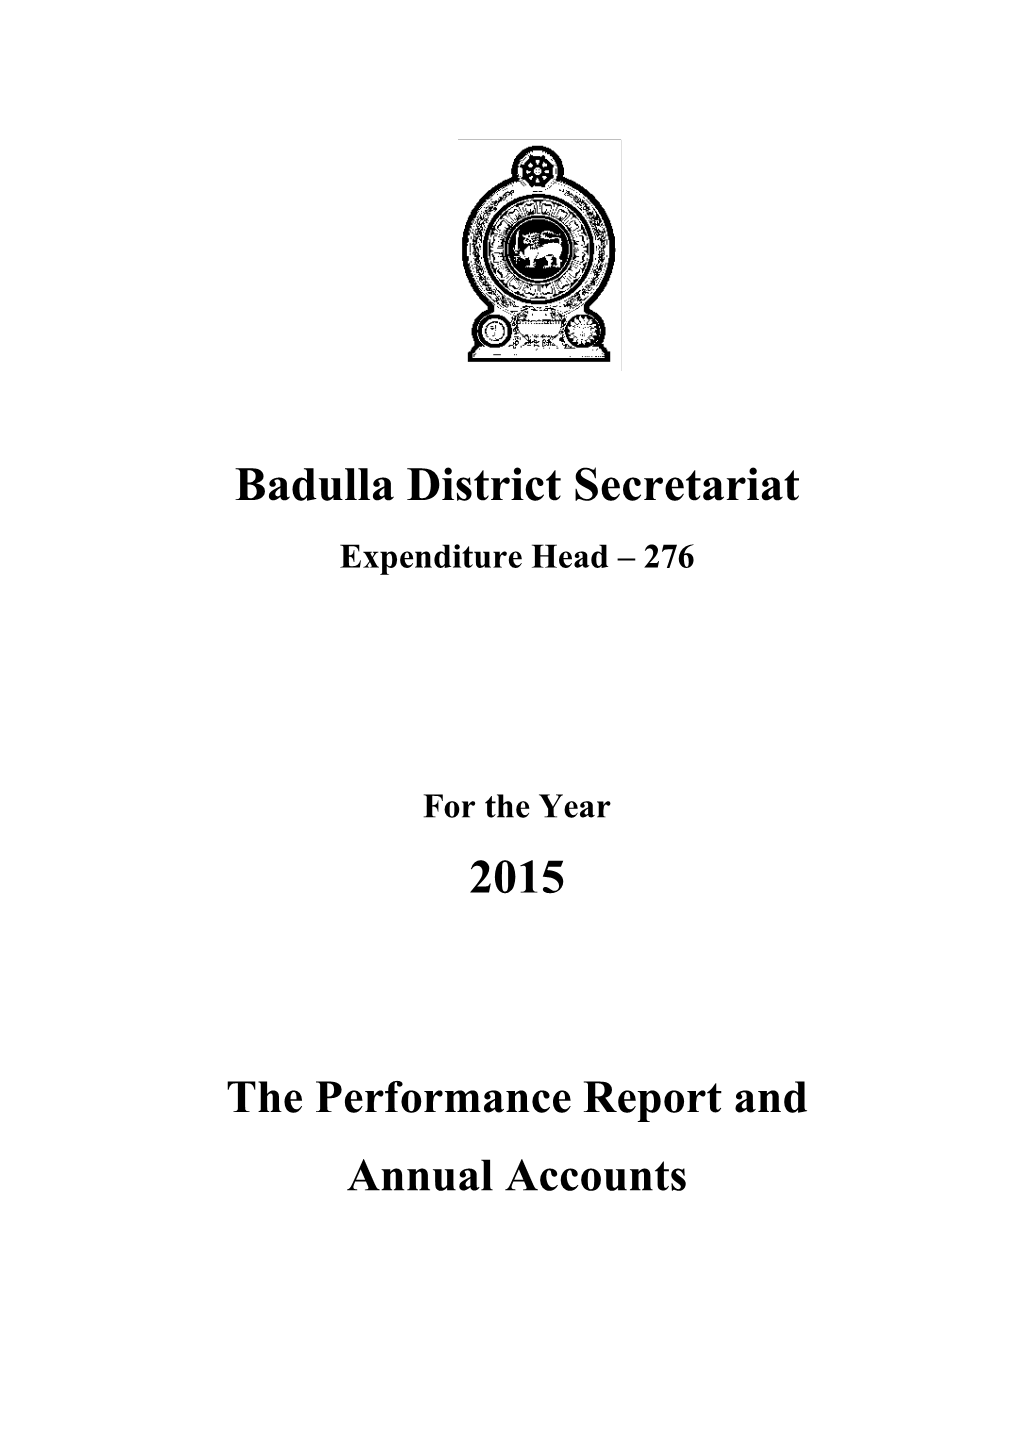 Badulla District Secretariat 2015